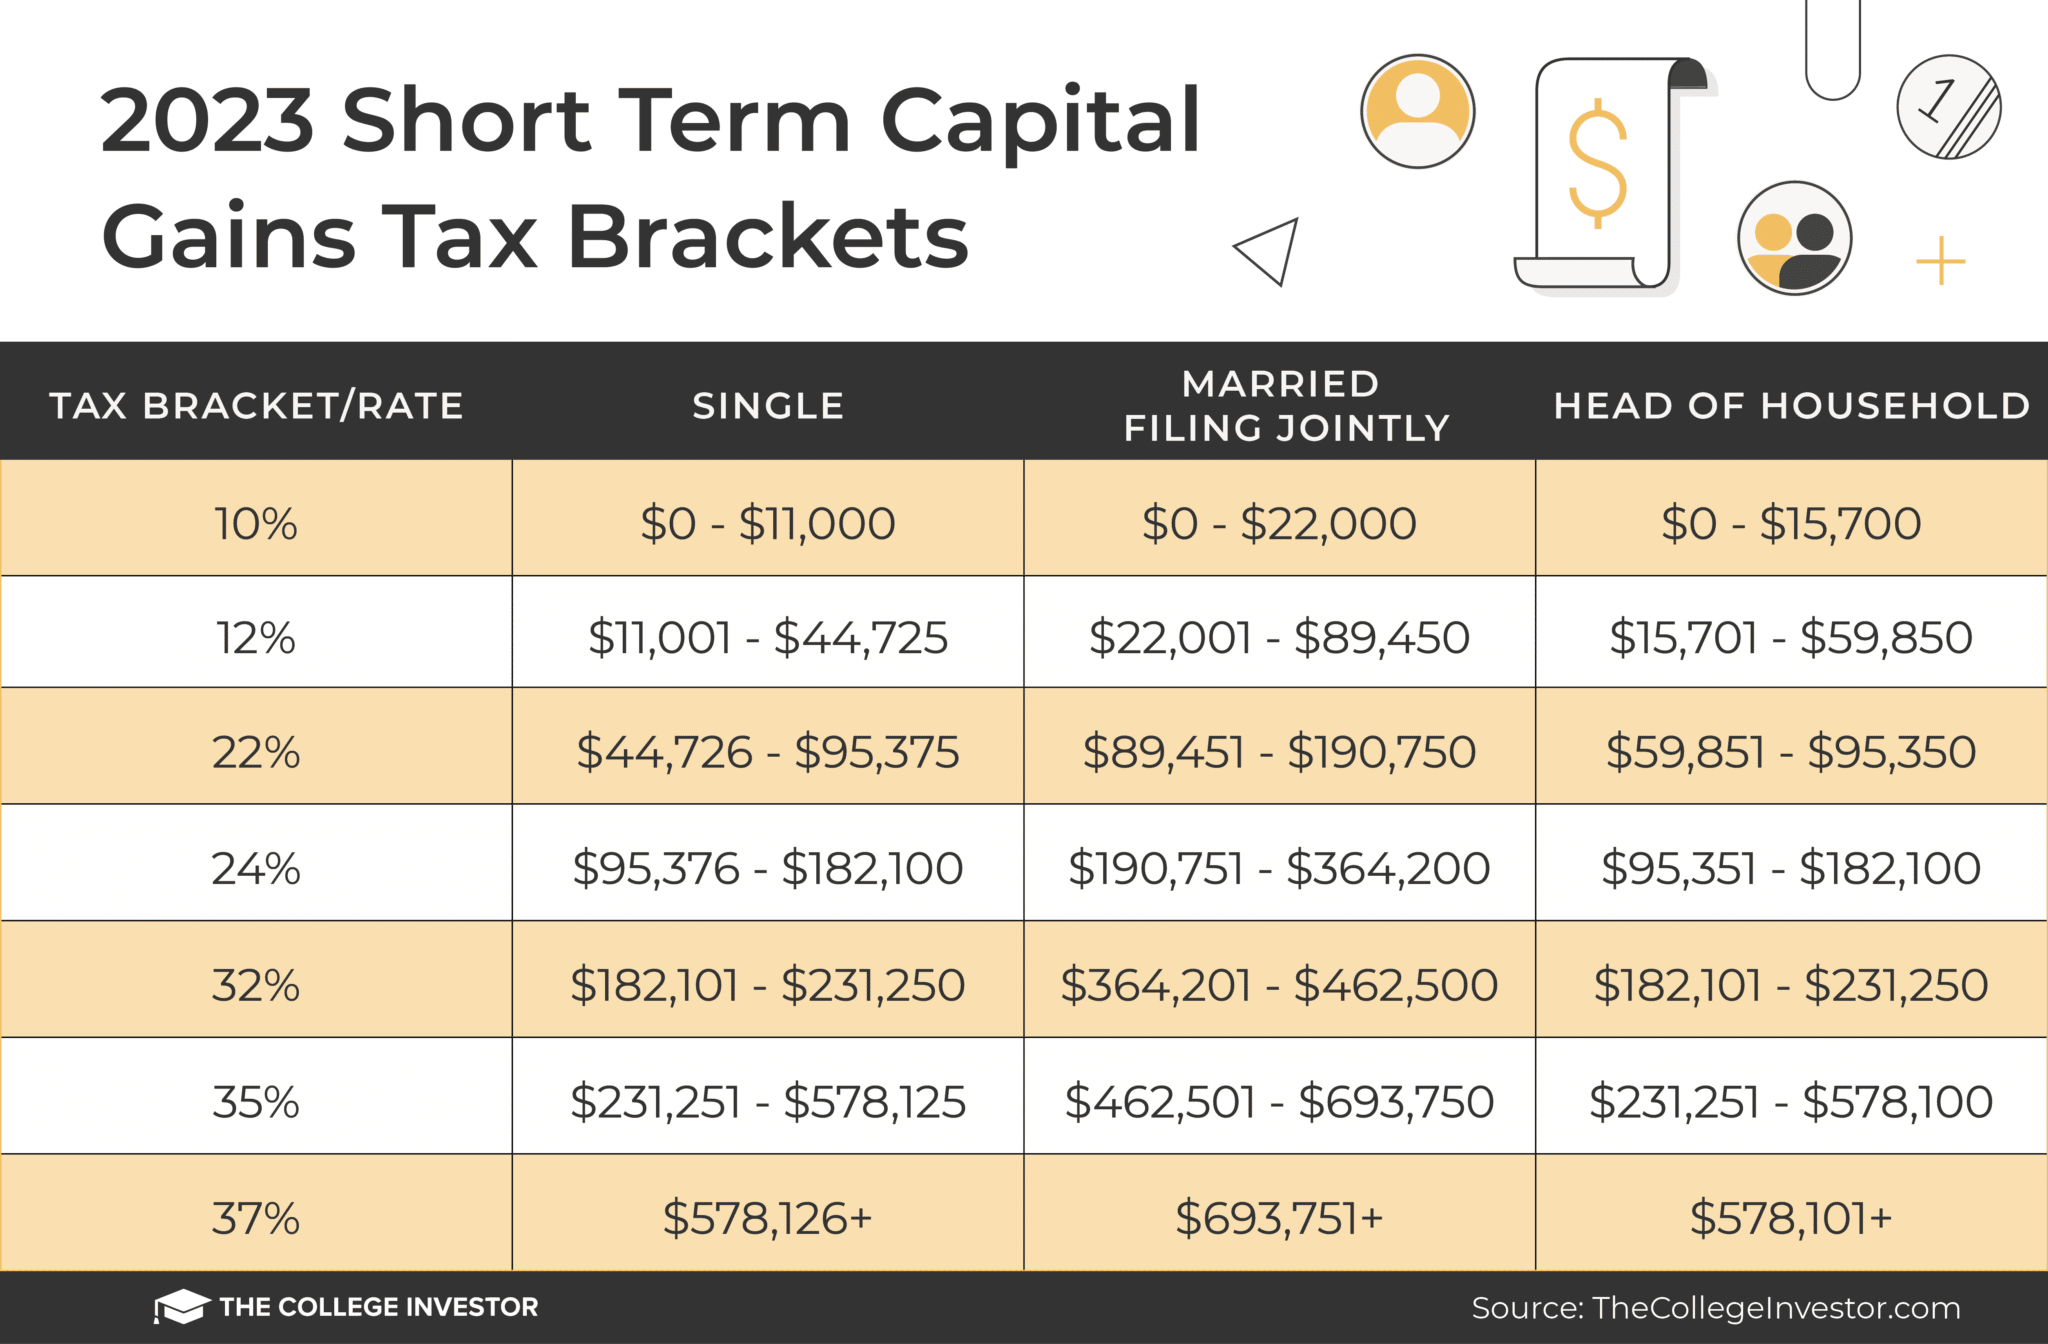 2023 Short Term Capital Gains Tax Brackets